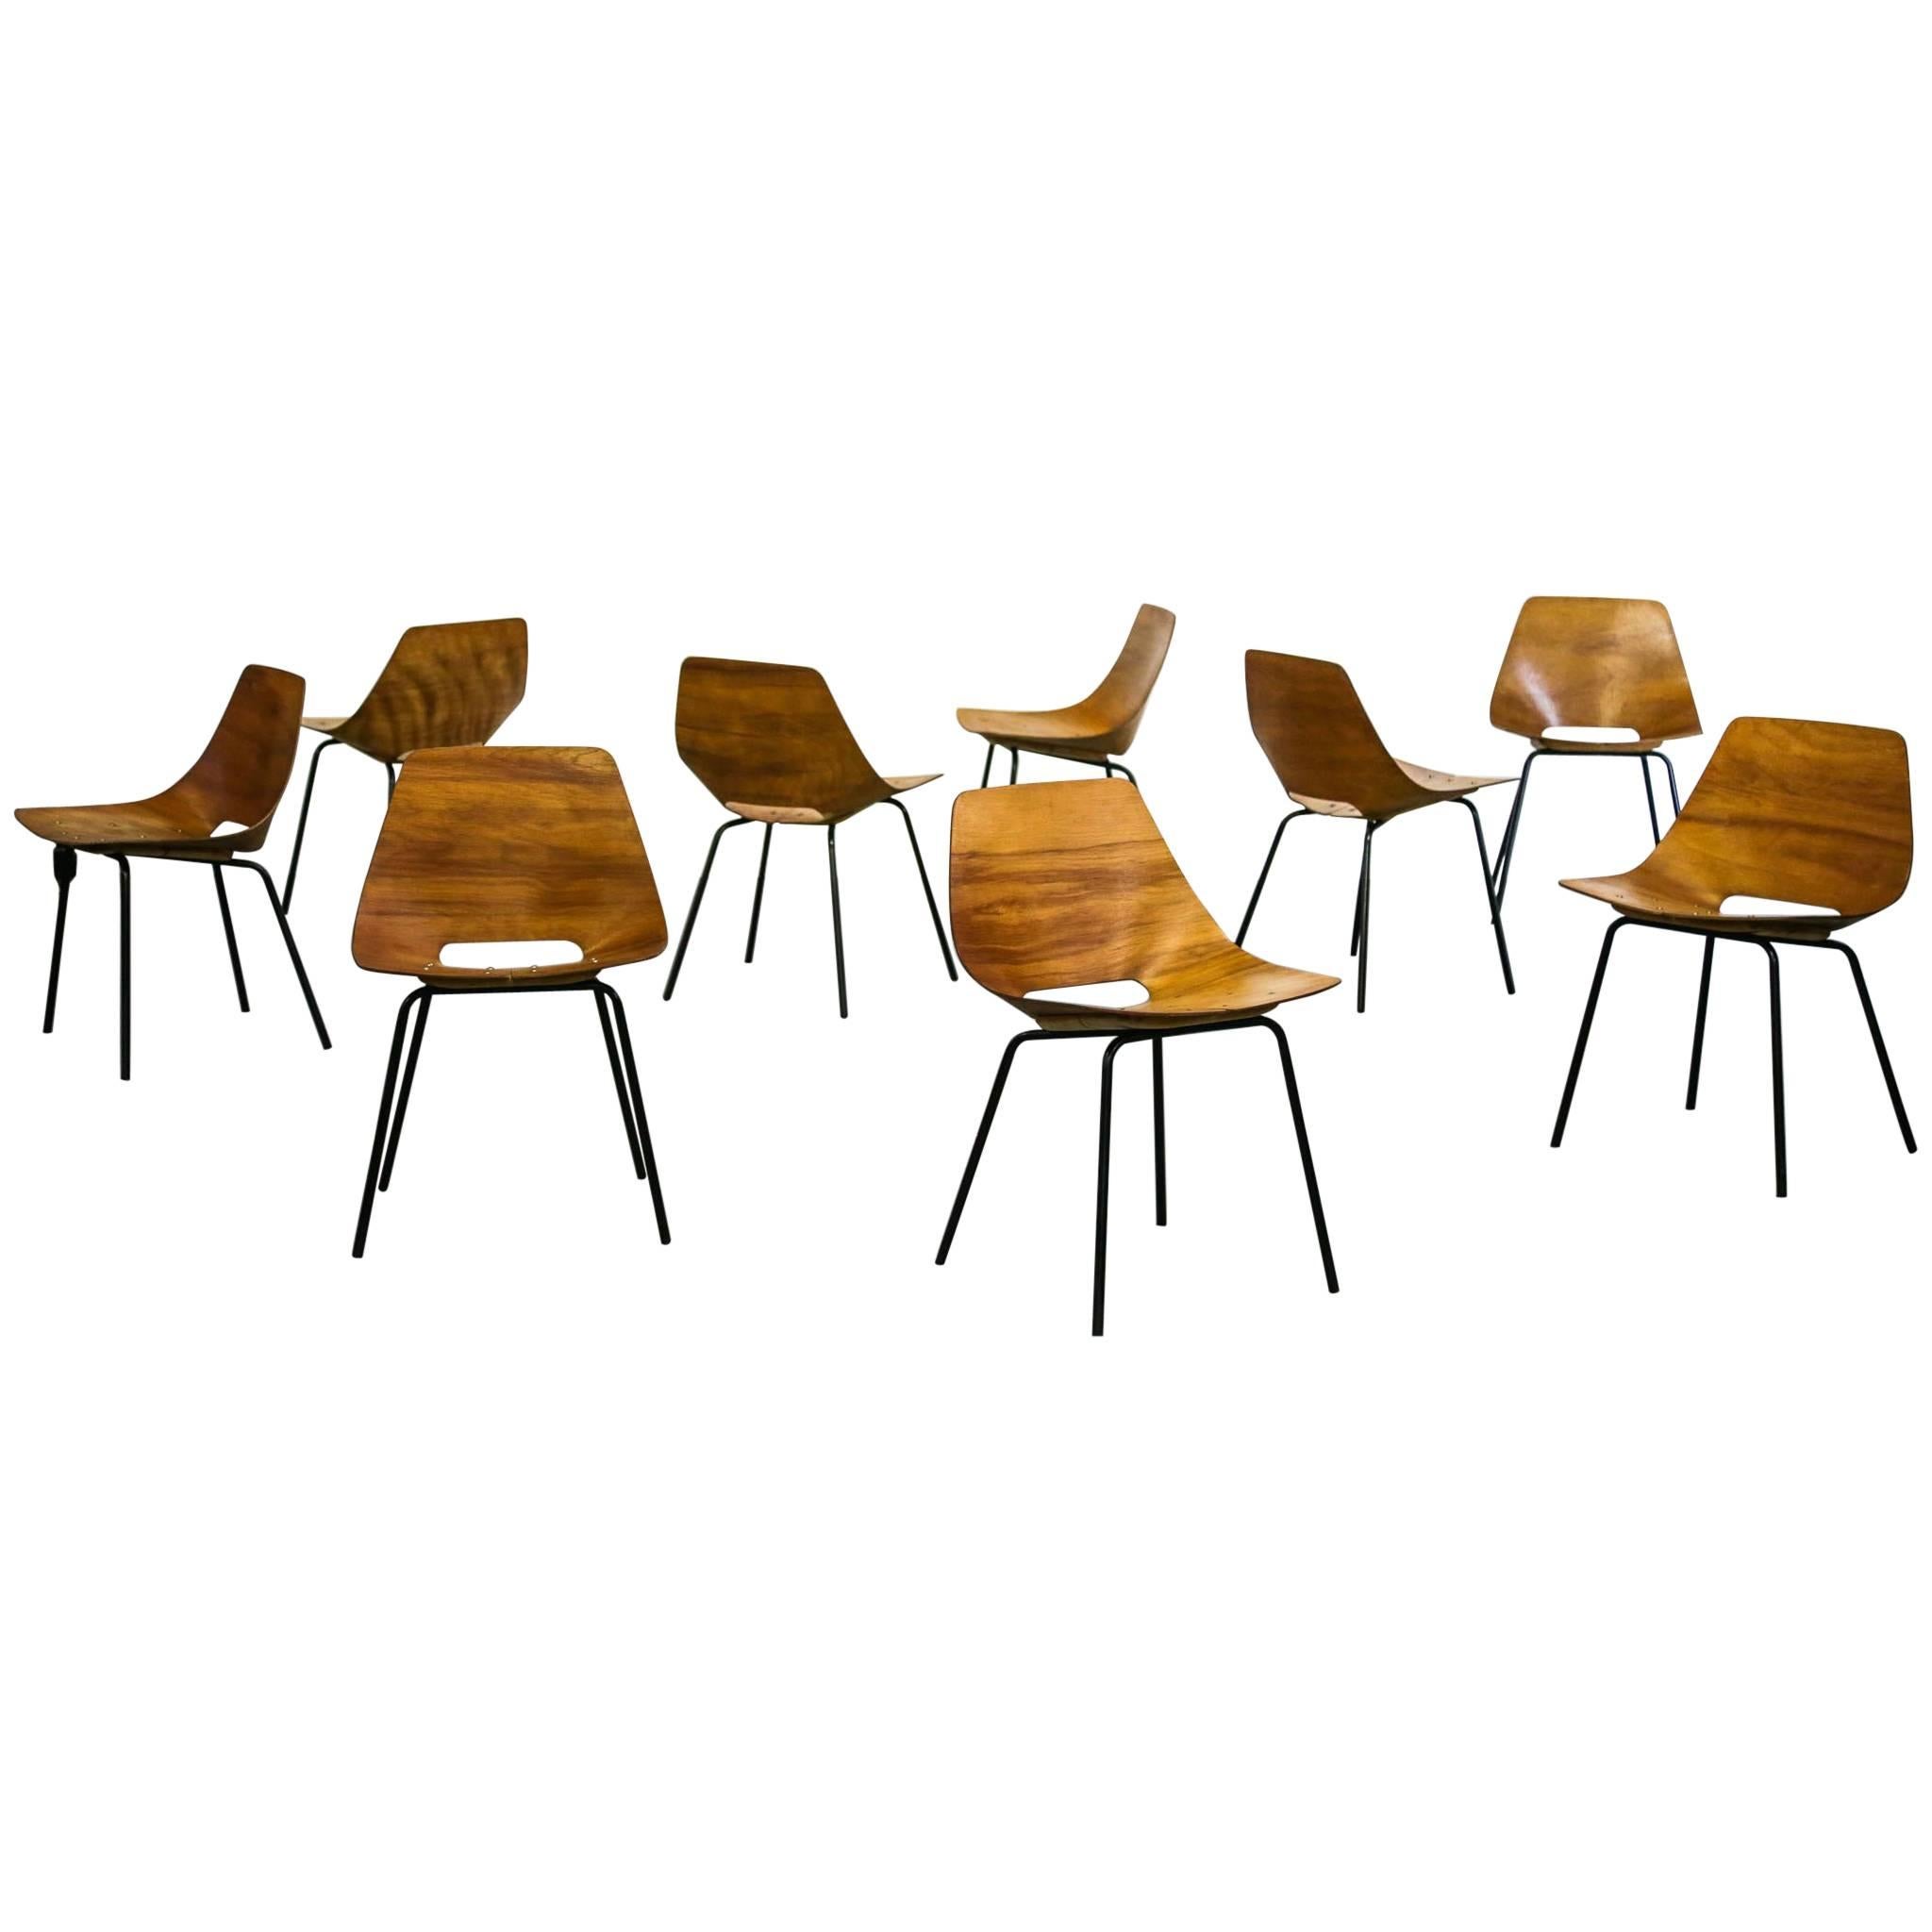 Set of Nine French Chair Pierre Guariche Model Tonneau for Steiner Design